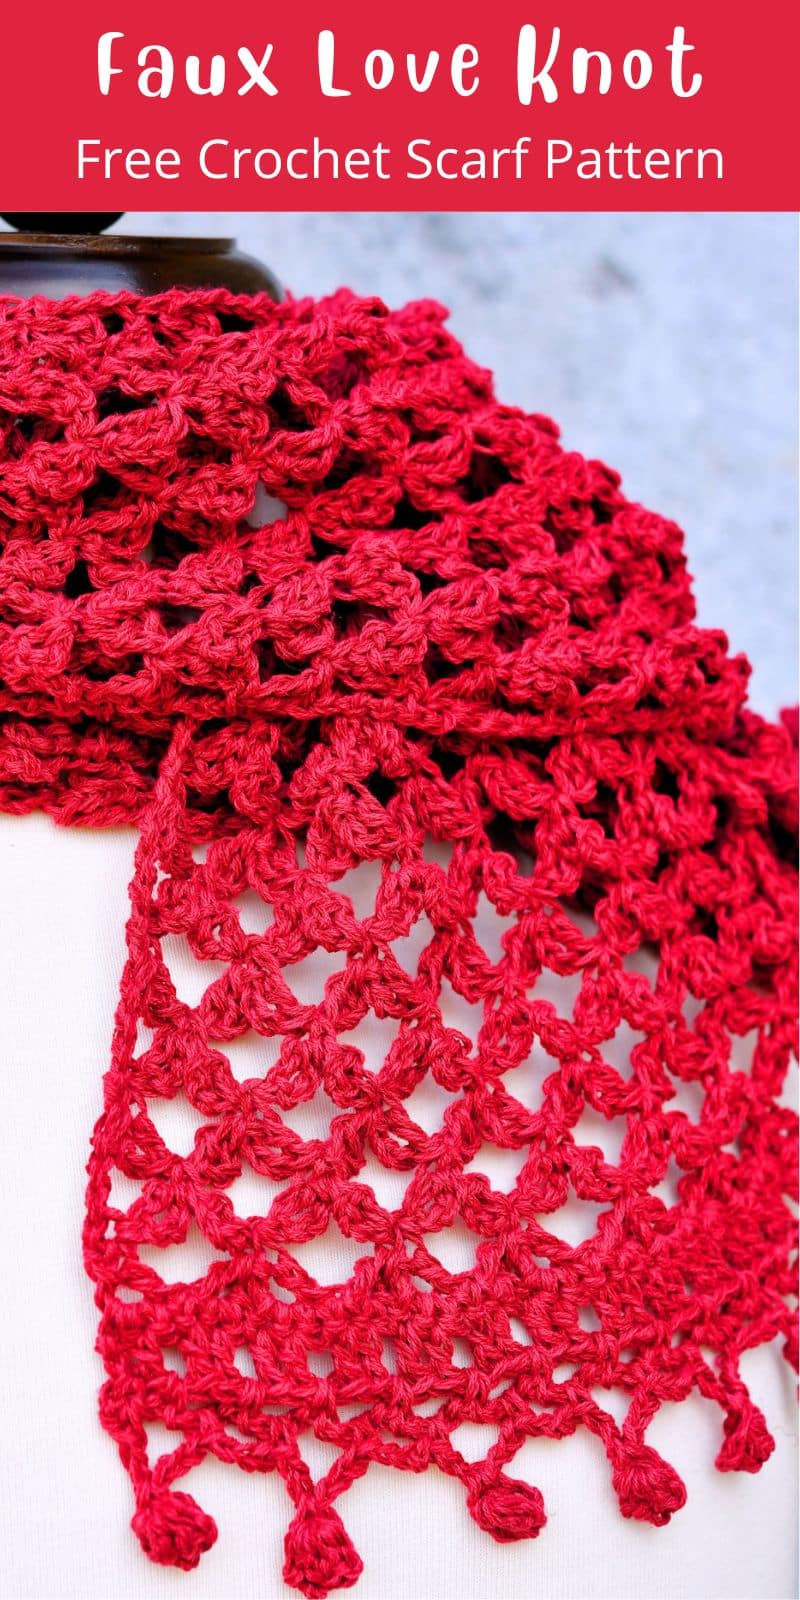 pinterest pin for faux love knot scarf by Kim Guzman for Make It Crochet